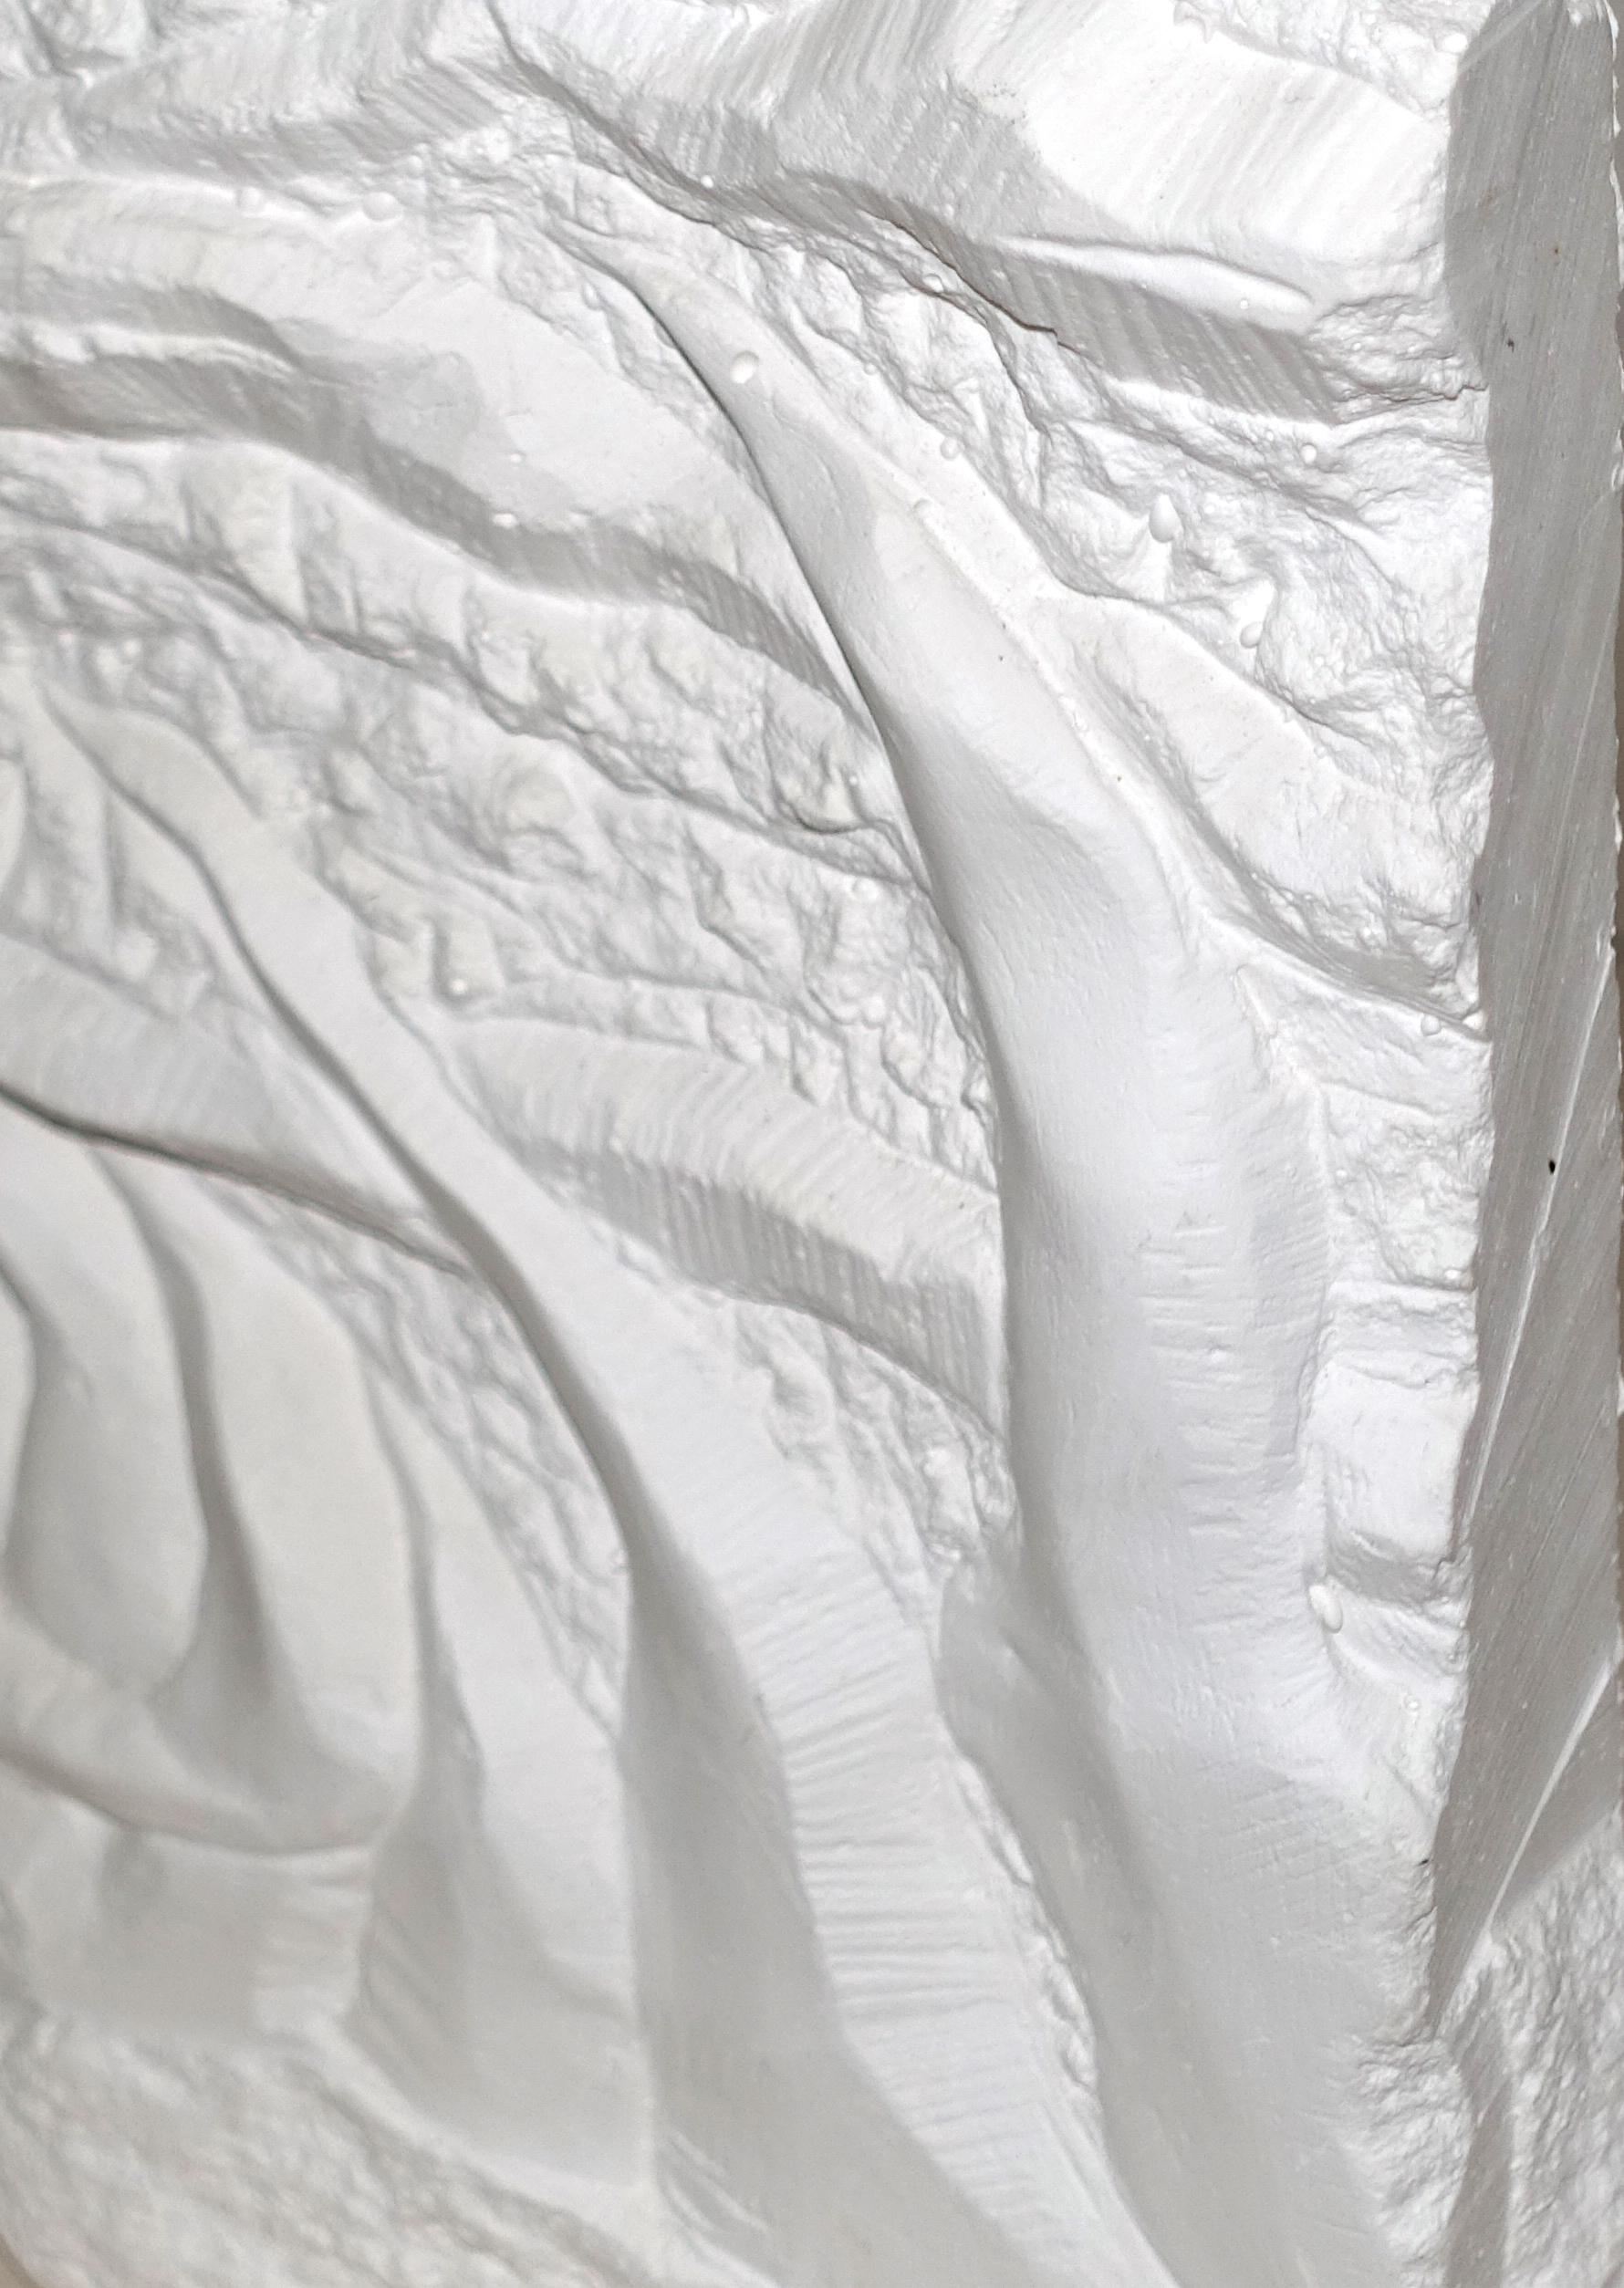 Fertile Sea: weiße abstrakte Reliefskulptur des Ozeans, an Wand oder Regal montiert (Abstrakt), Sculpture, von Ava Blitz